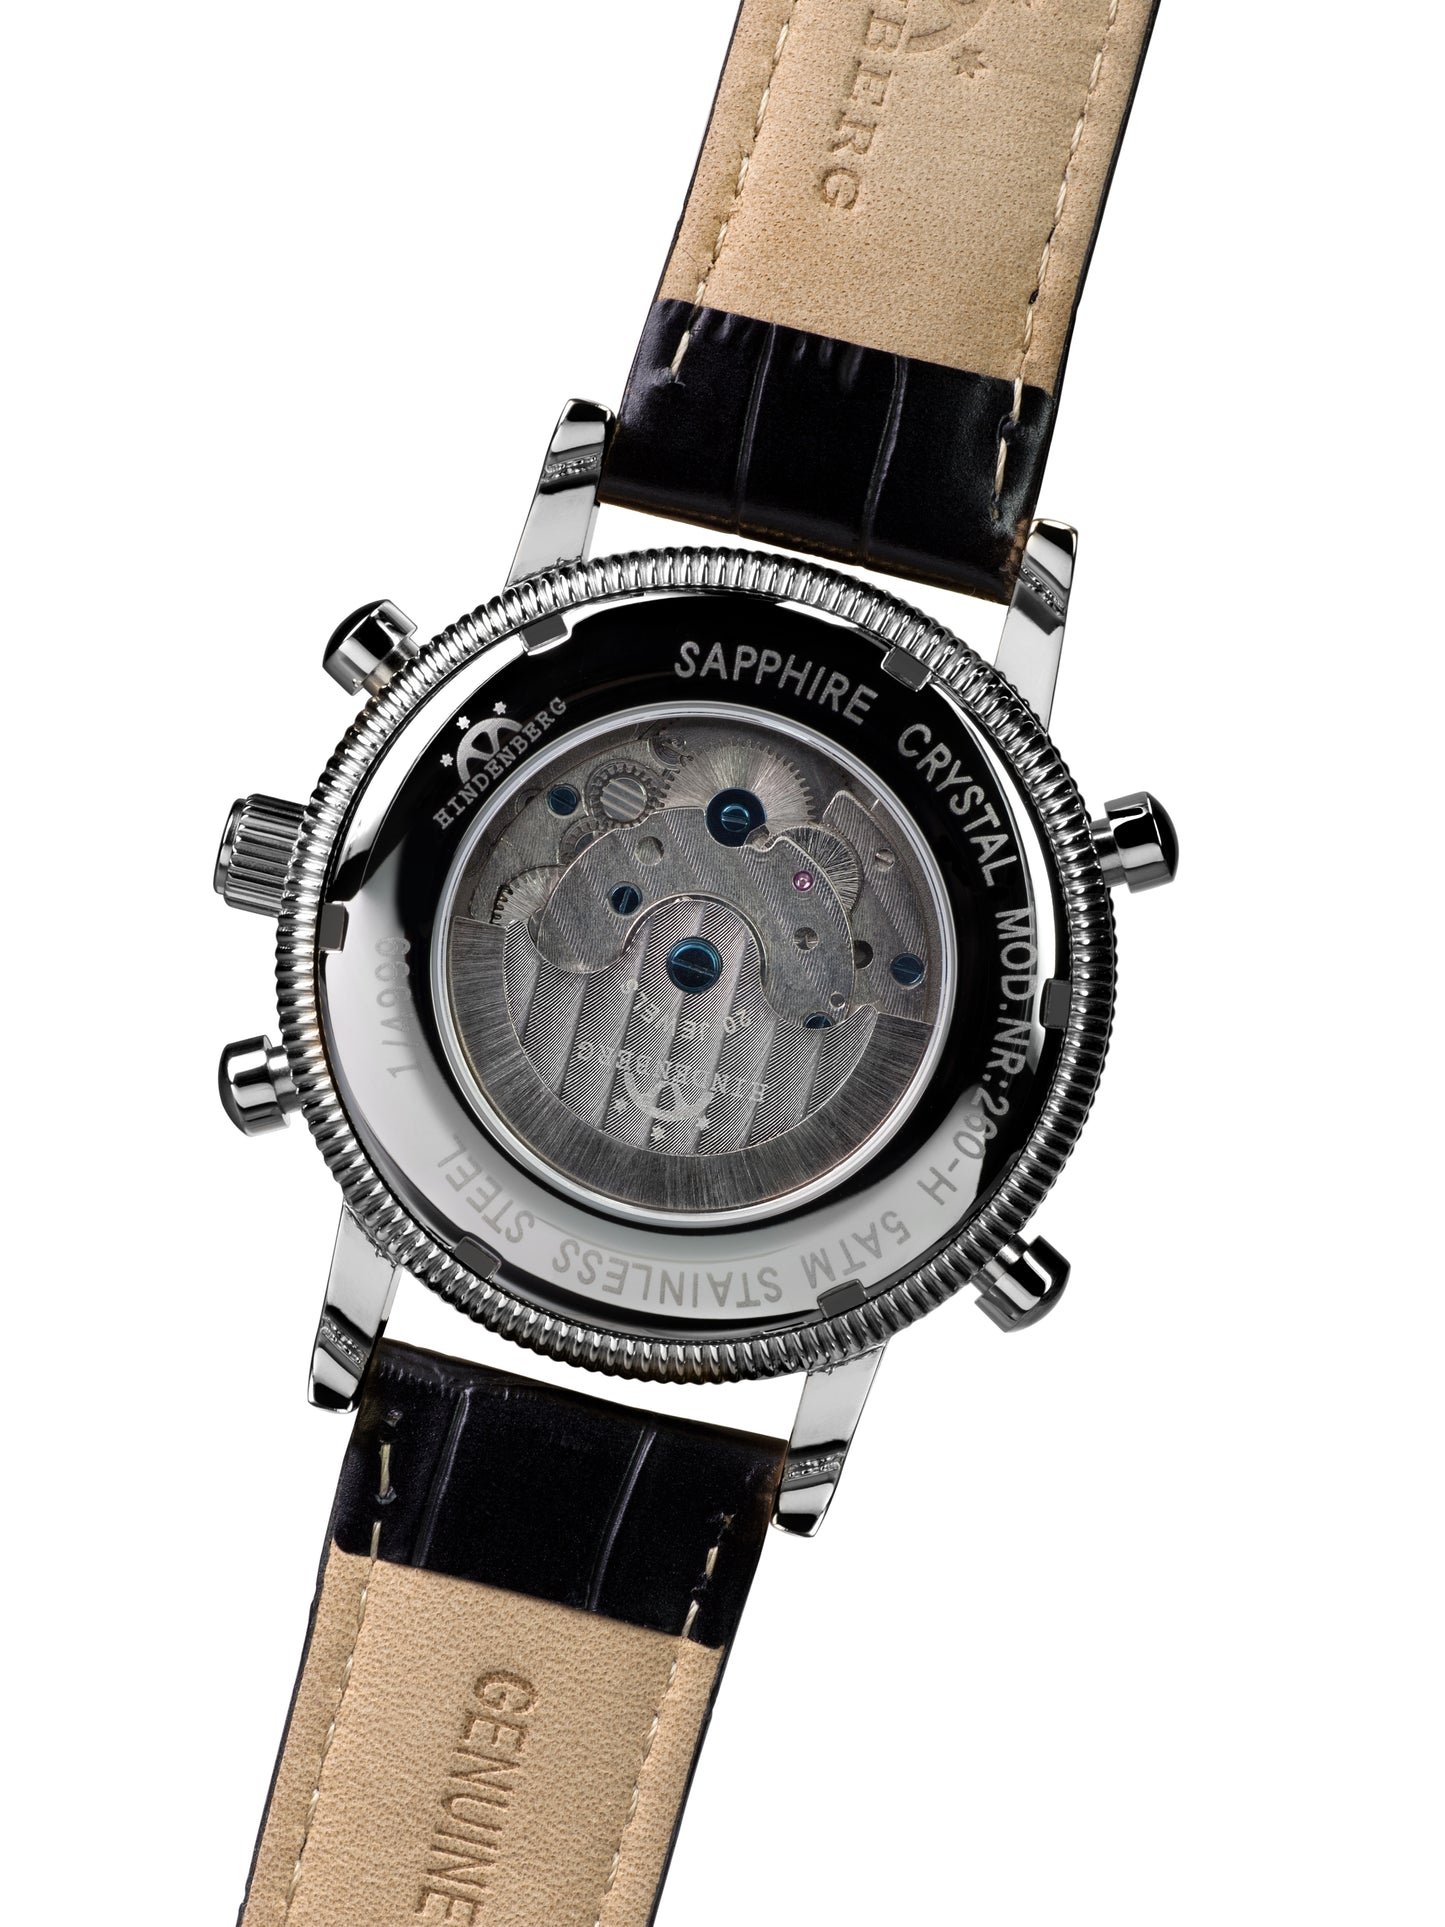 Automatic watches — Air Classic — Hindenberg — Stahl Blau